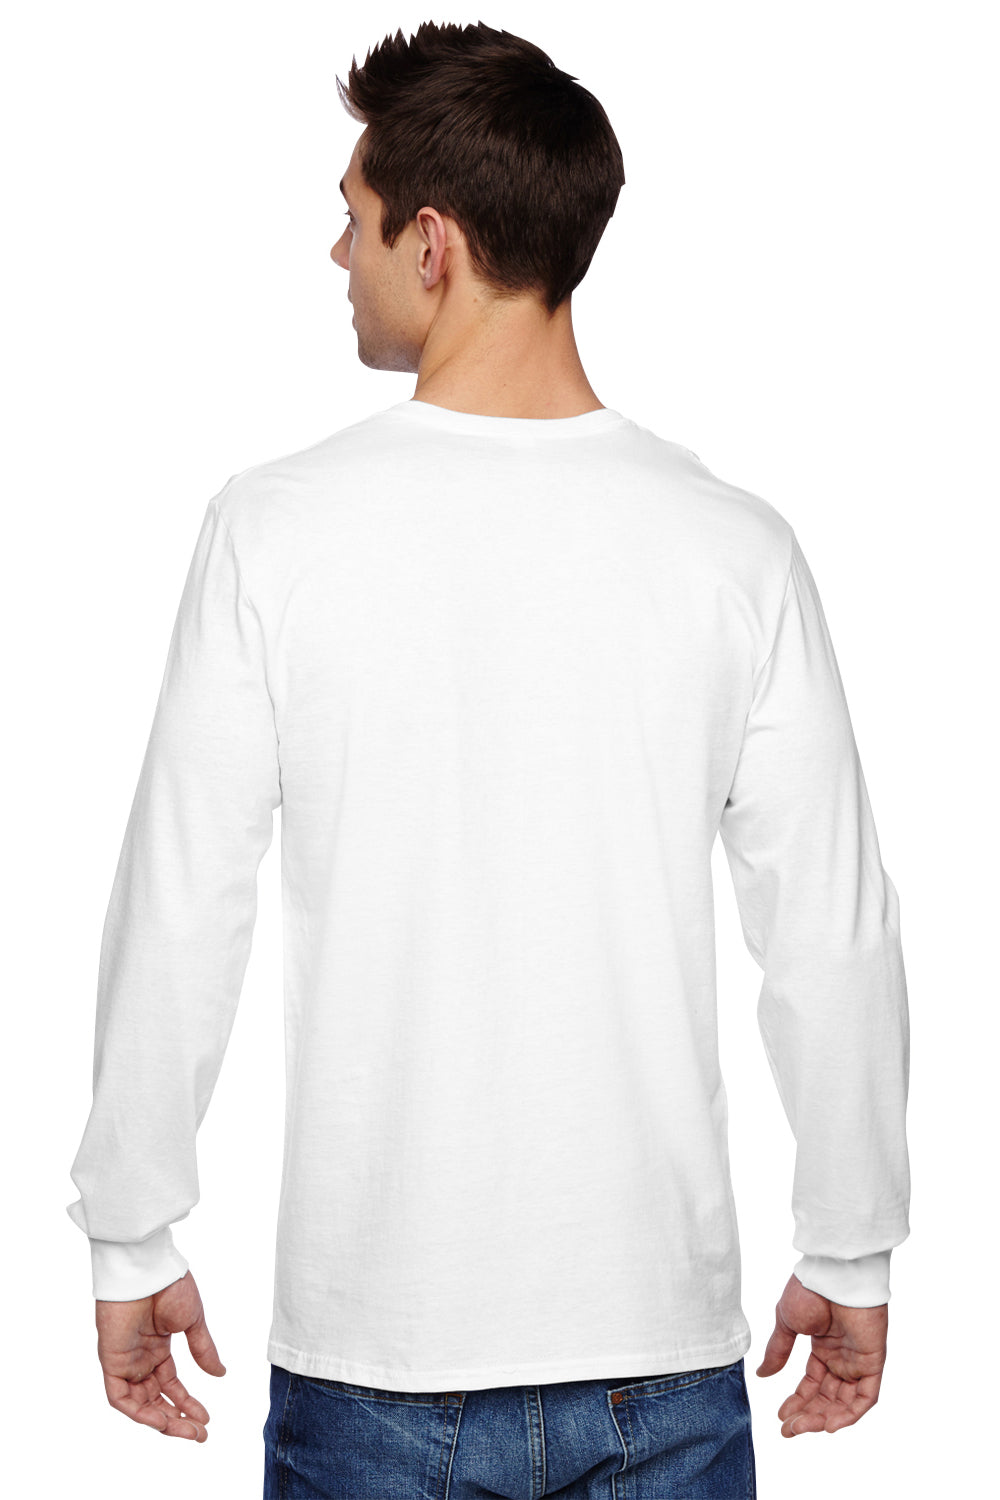 Fruit Of The Loom SFLR Mens Sofspun Jersey Long Sleeve Crewneck T-Shirt White Back